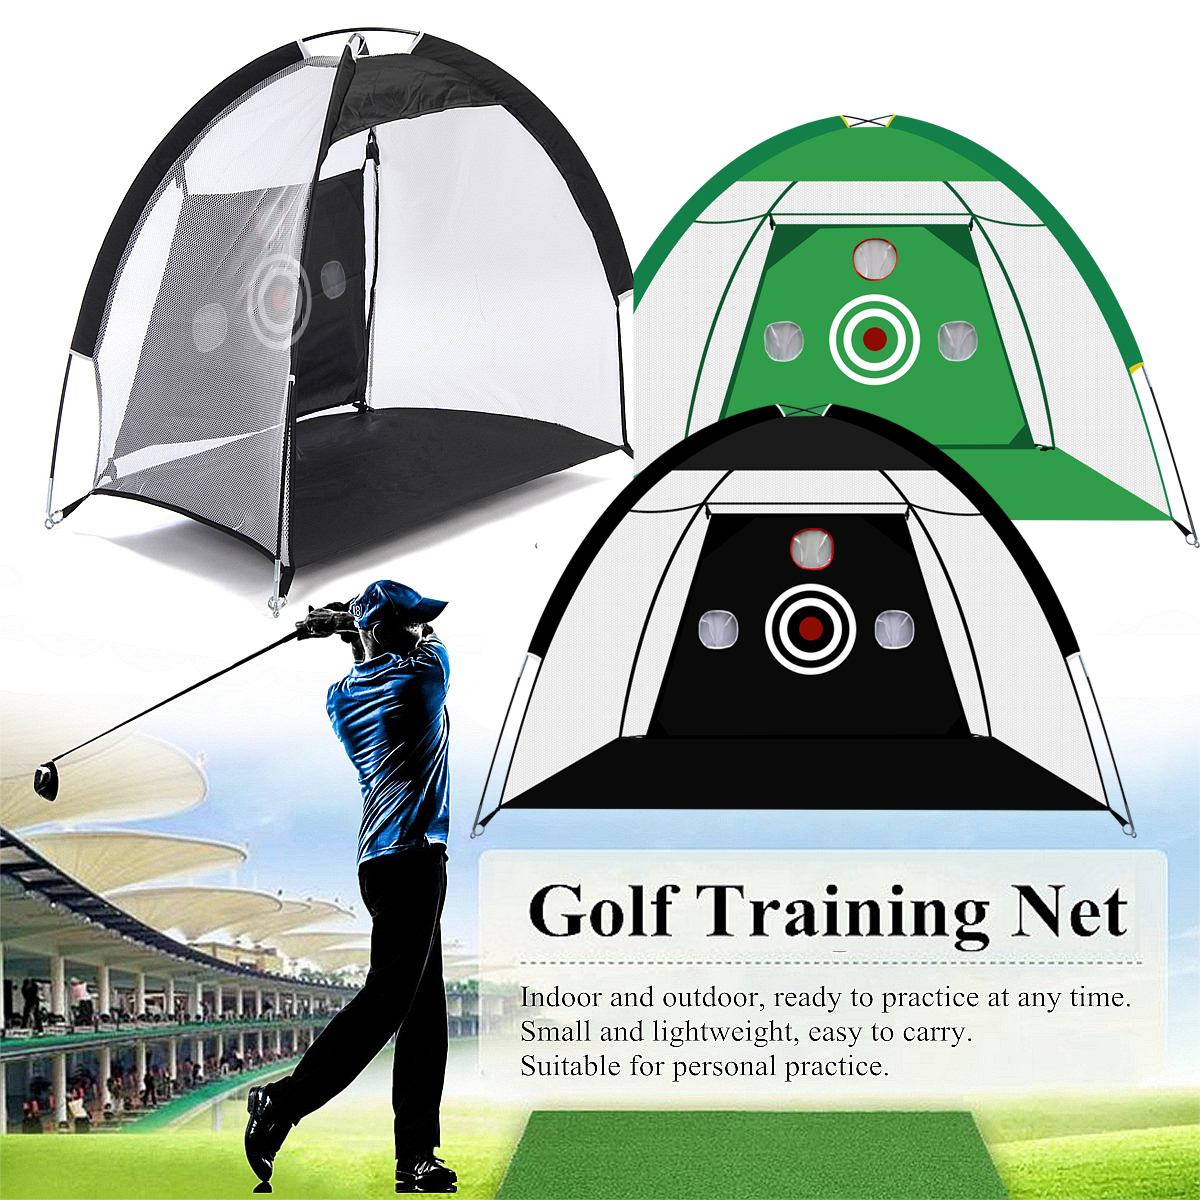 3m-Adults-Kids-Folding-Portable-Golf-Training-Aids-Cage-Tent-Net-Mat-Tee-Outdoor-Trip-Indoor-Golf-Cl-1662971-1